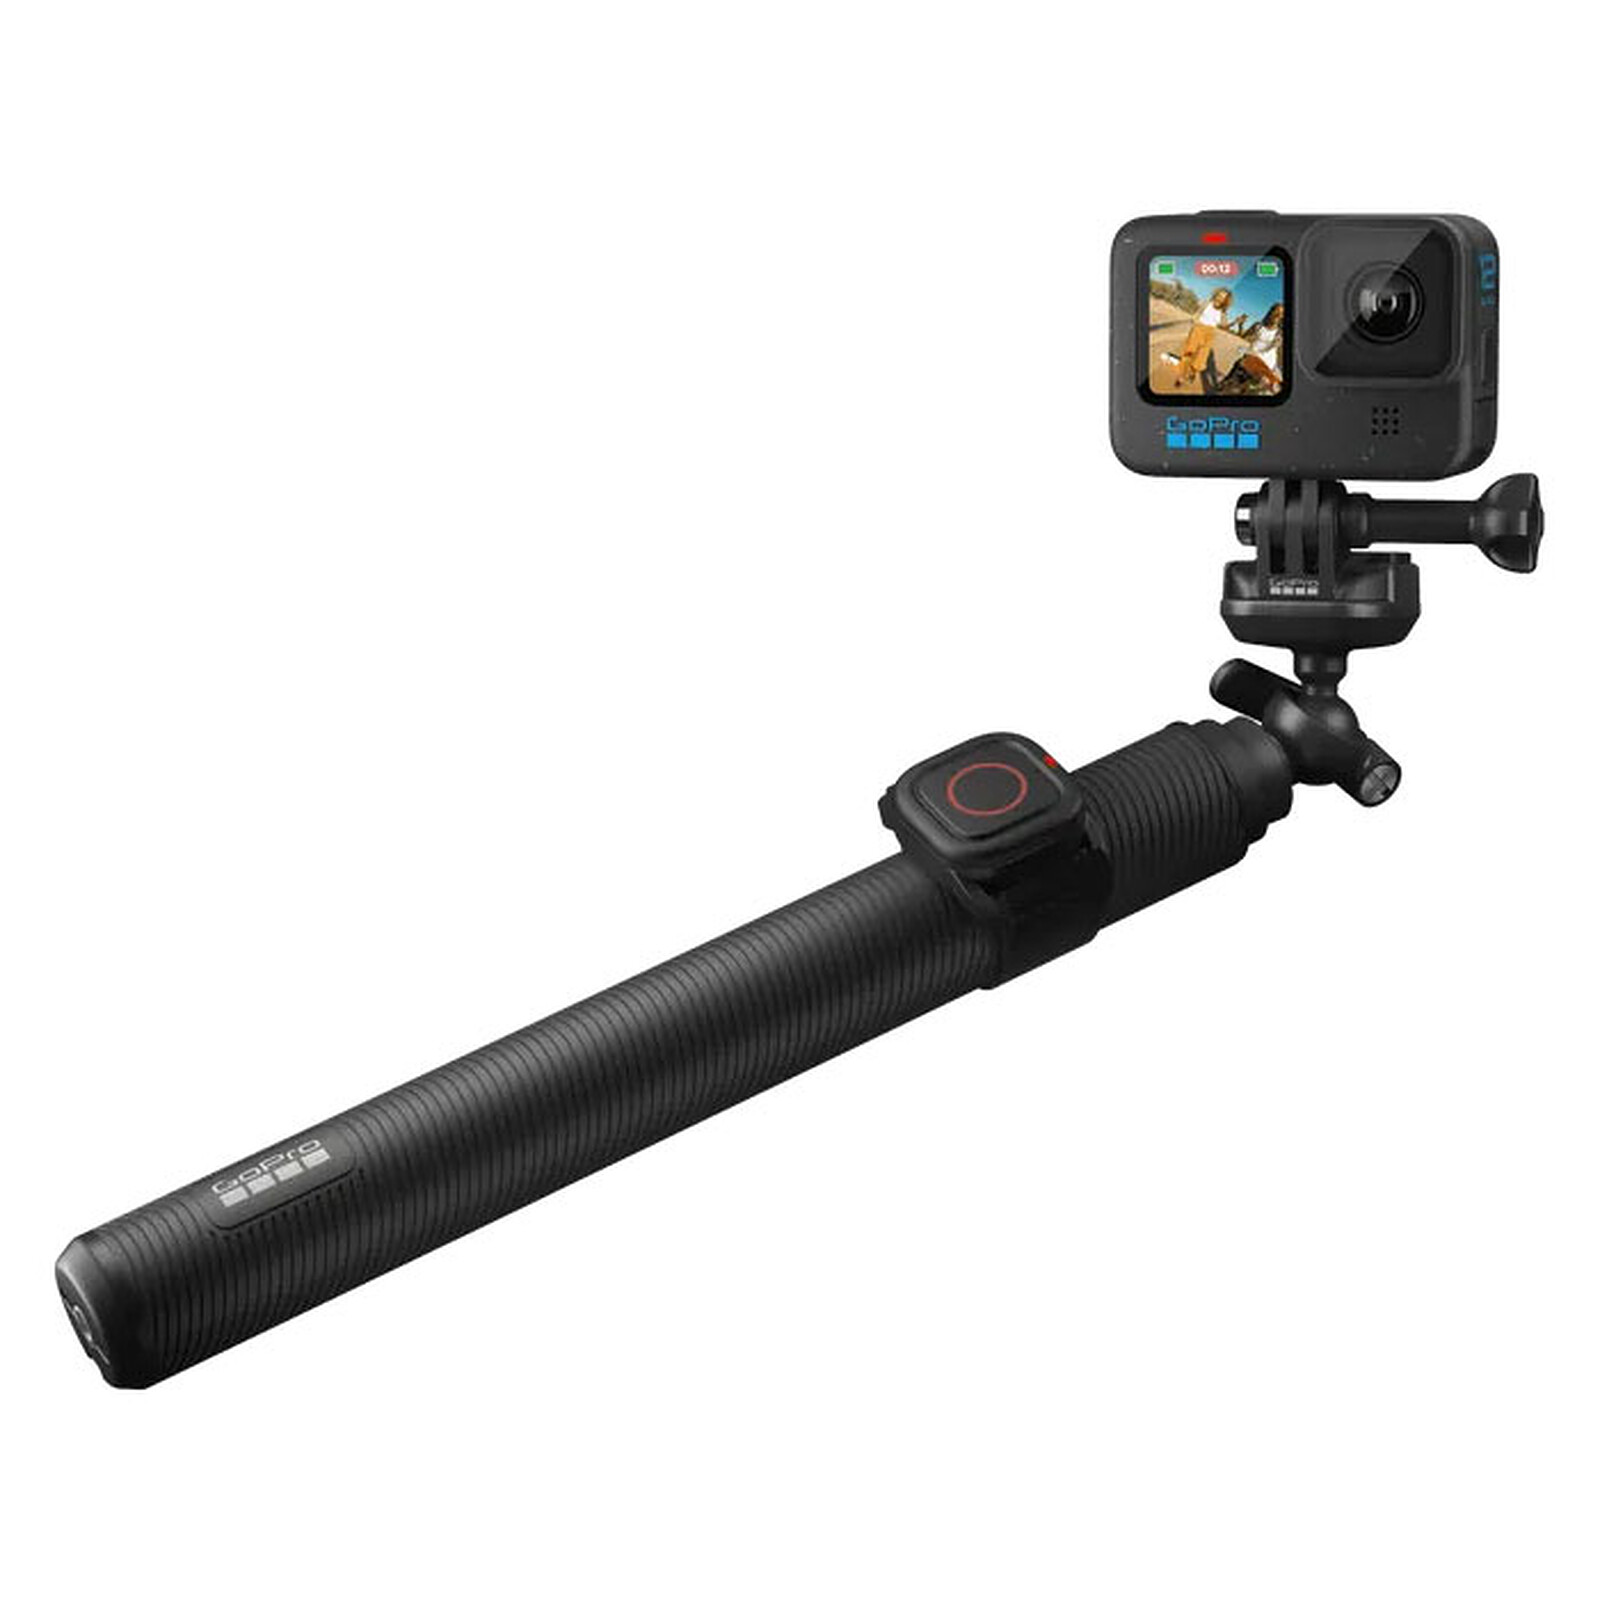 GoPro Kit Voyage 2.0 - Accessoires caméra sportive - Garantie 3